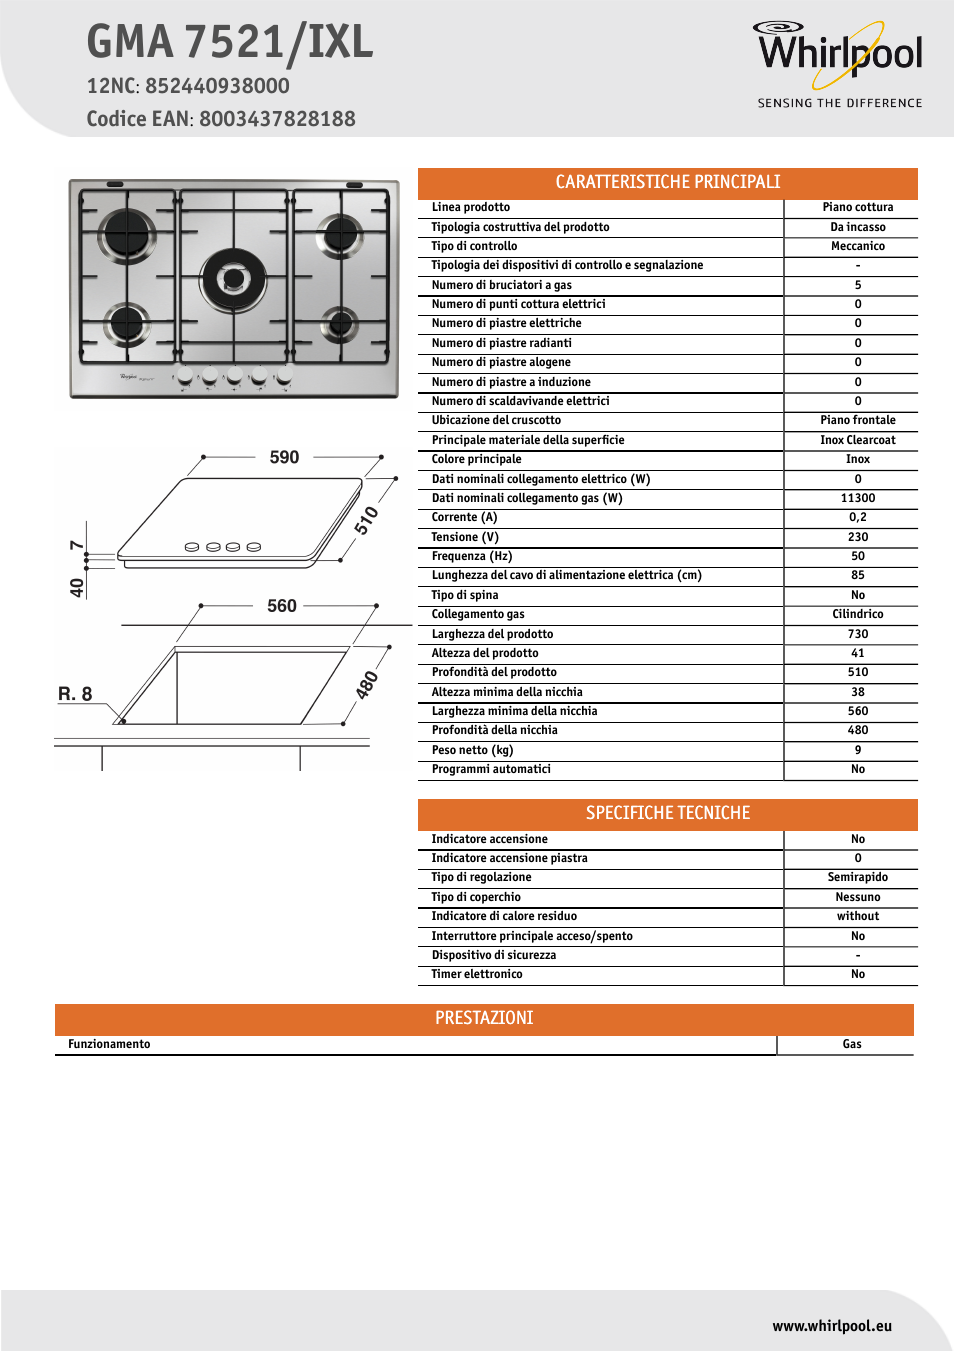 Whirlpool GMA 7521-IXL Manuale d'uso | Pagine: 1